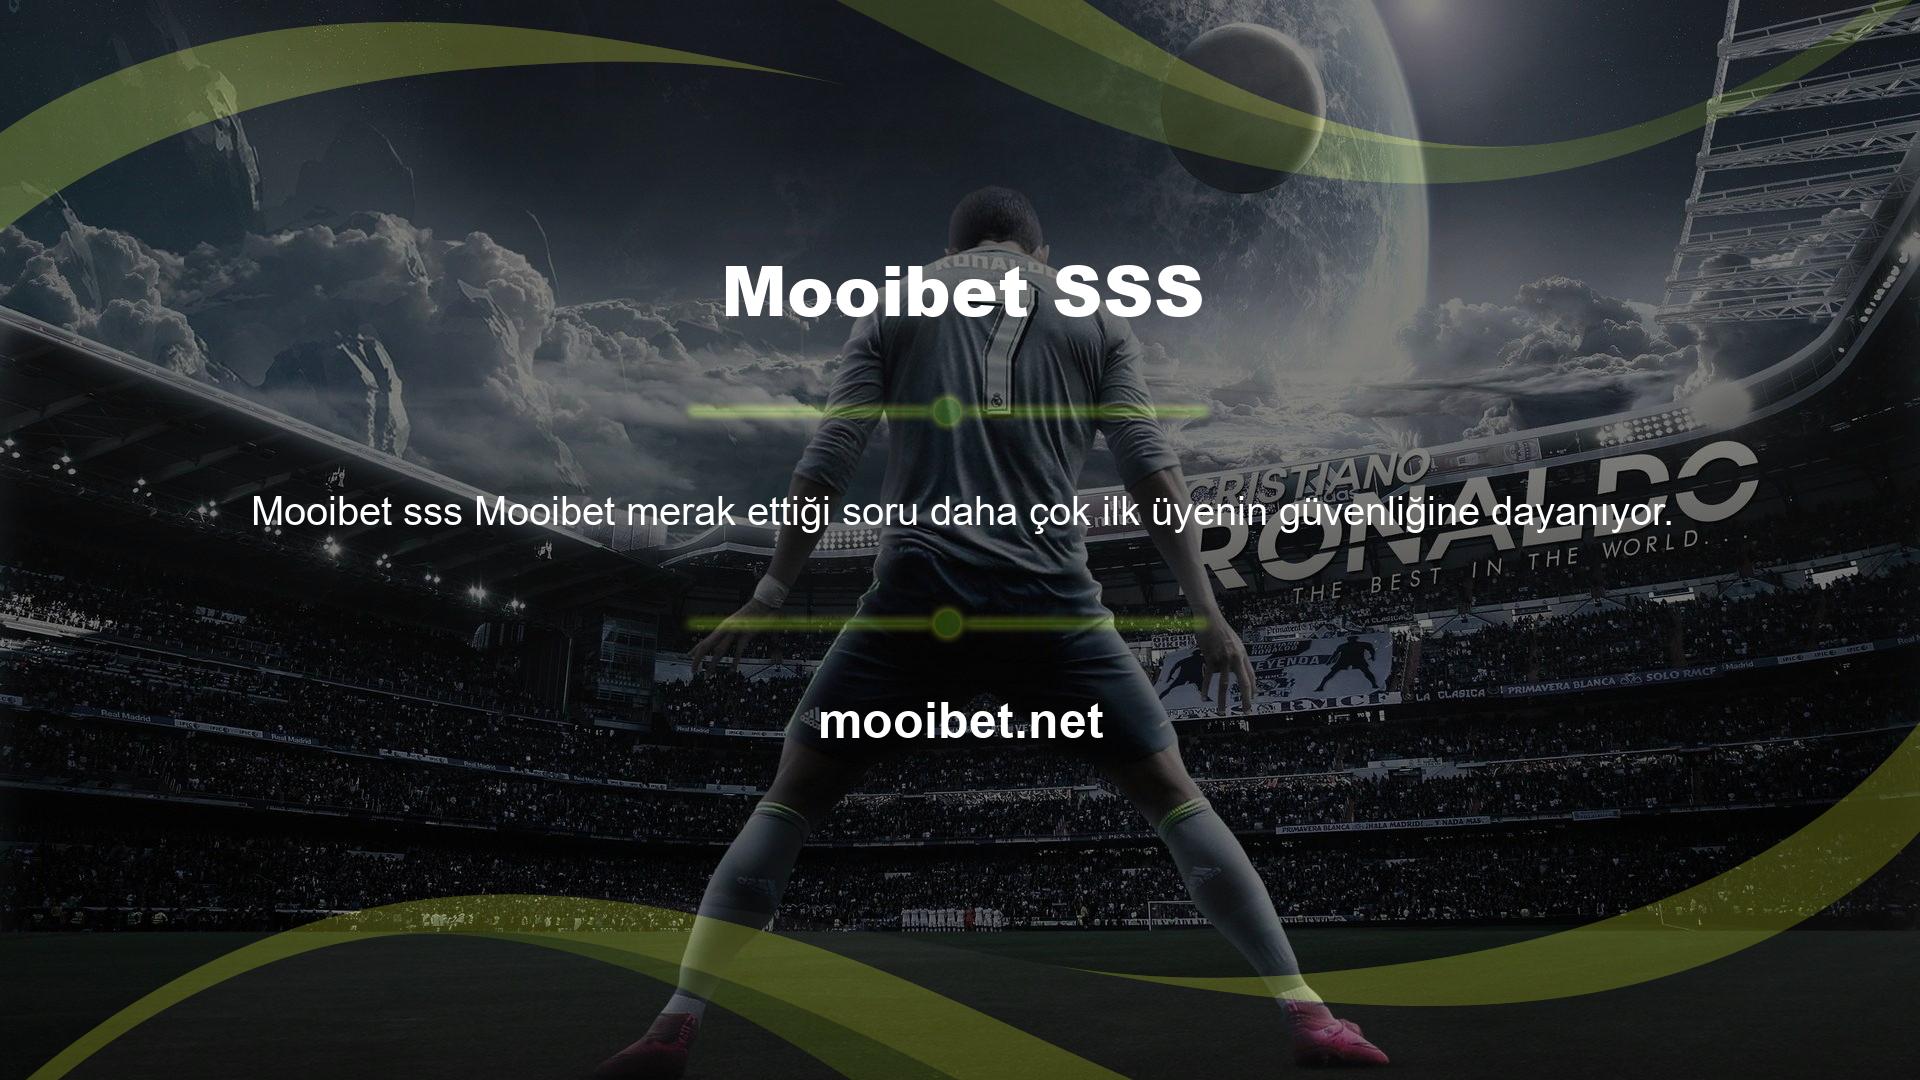 Mooibet SSS